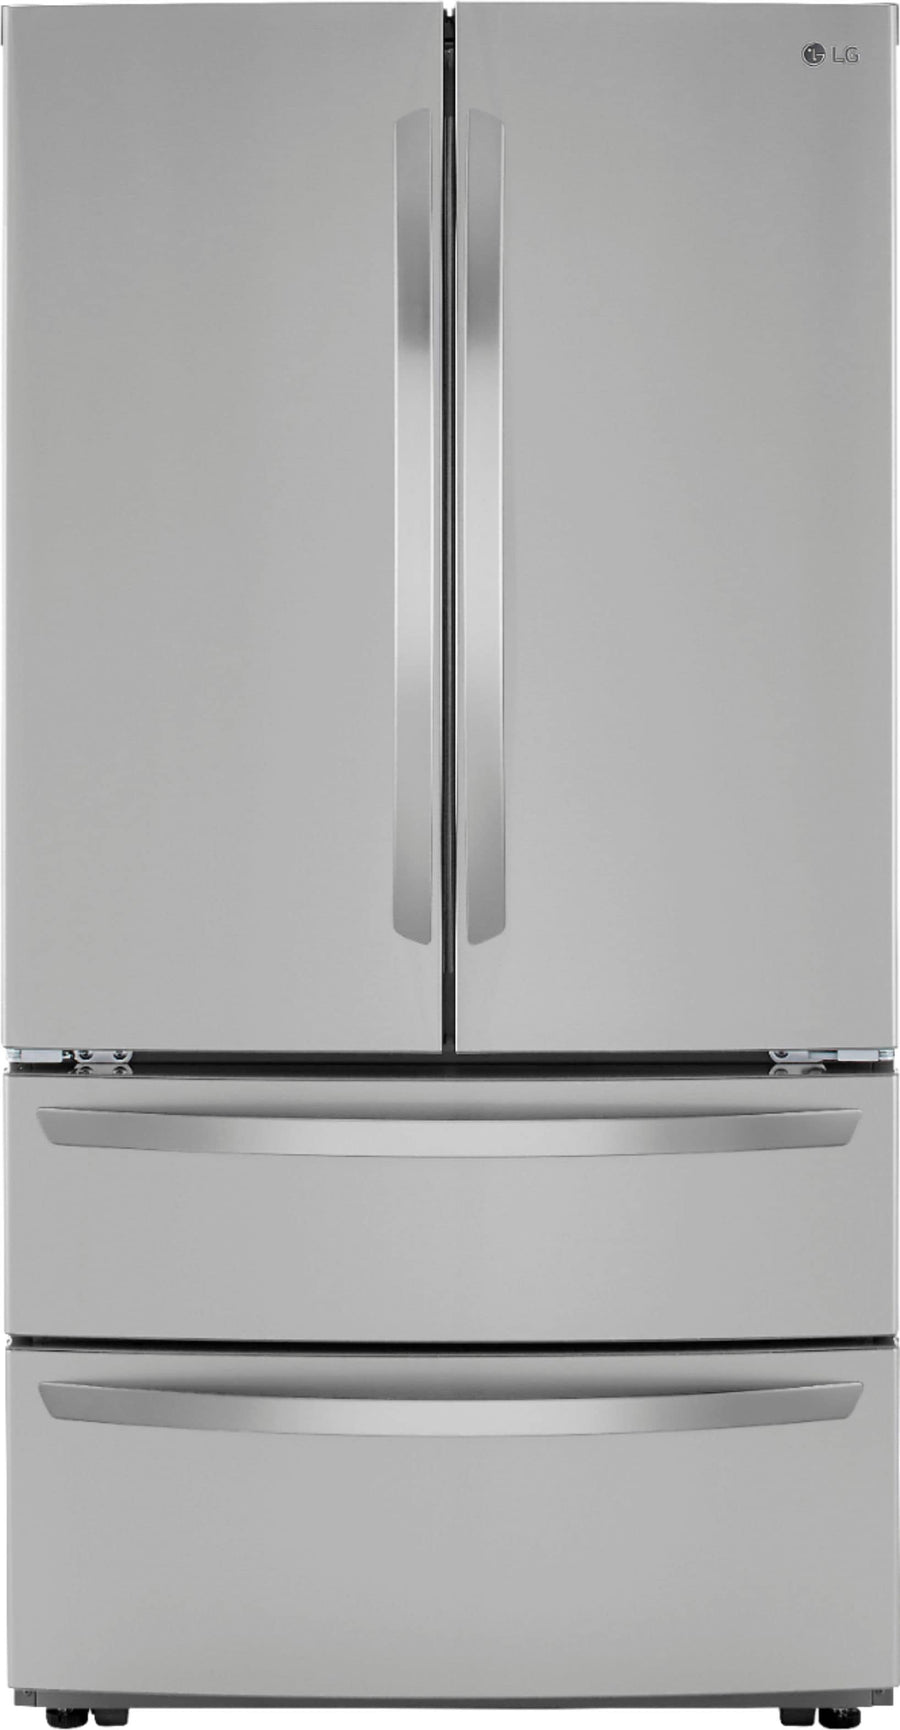 LG - 22.7 Cu. Ft. 4-Door French Door Counter-Depth Refrigerator with Double Freezer and Internal Water Dispenser - Stainless steel_0